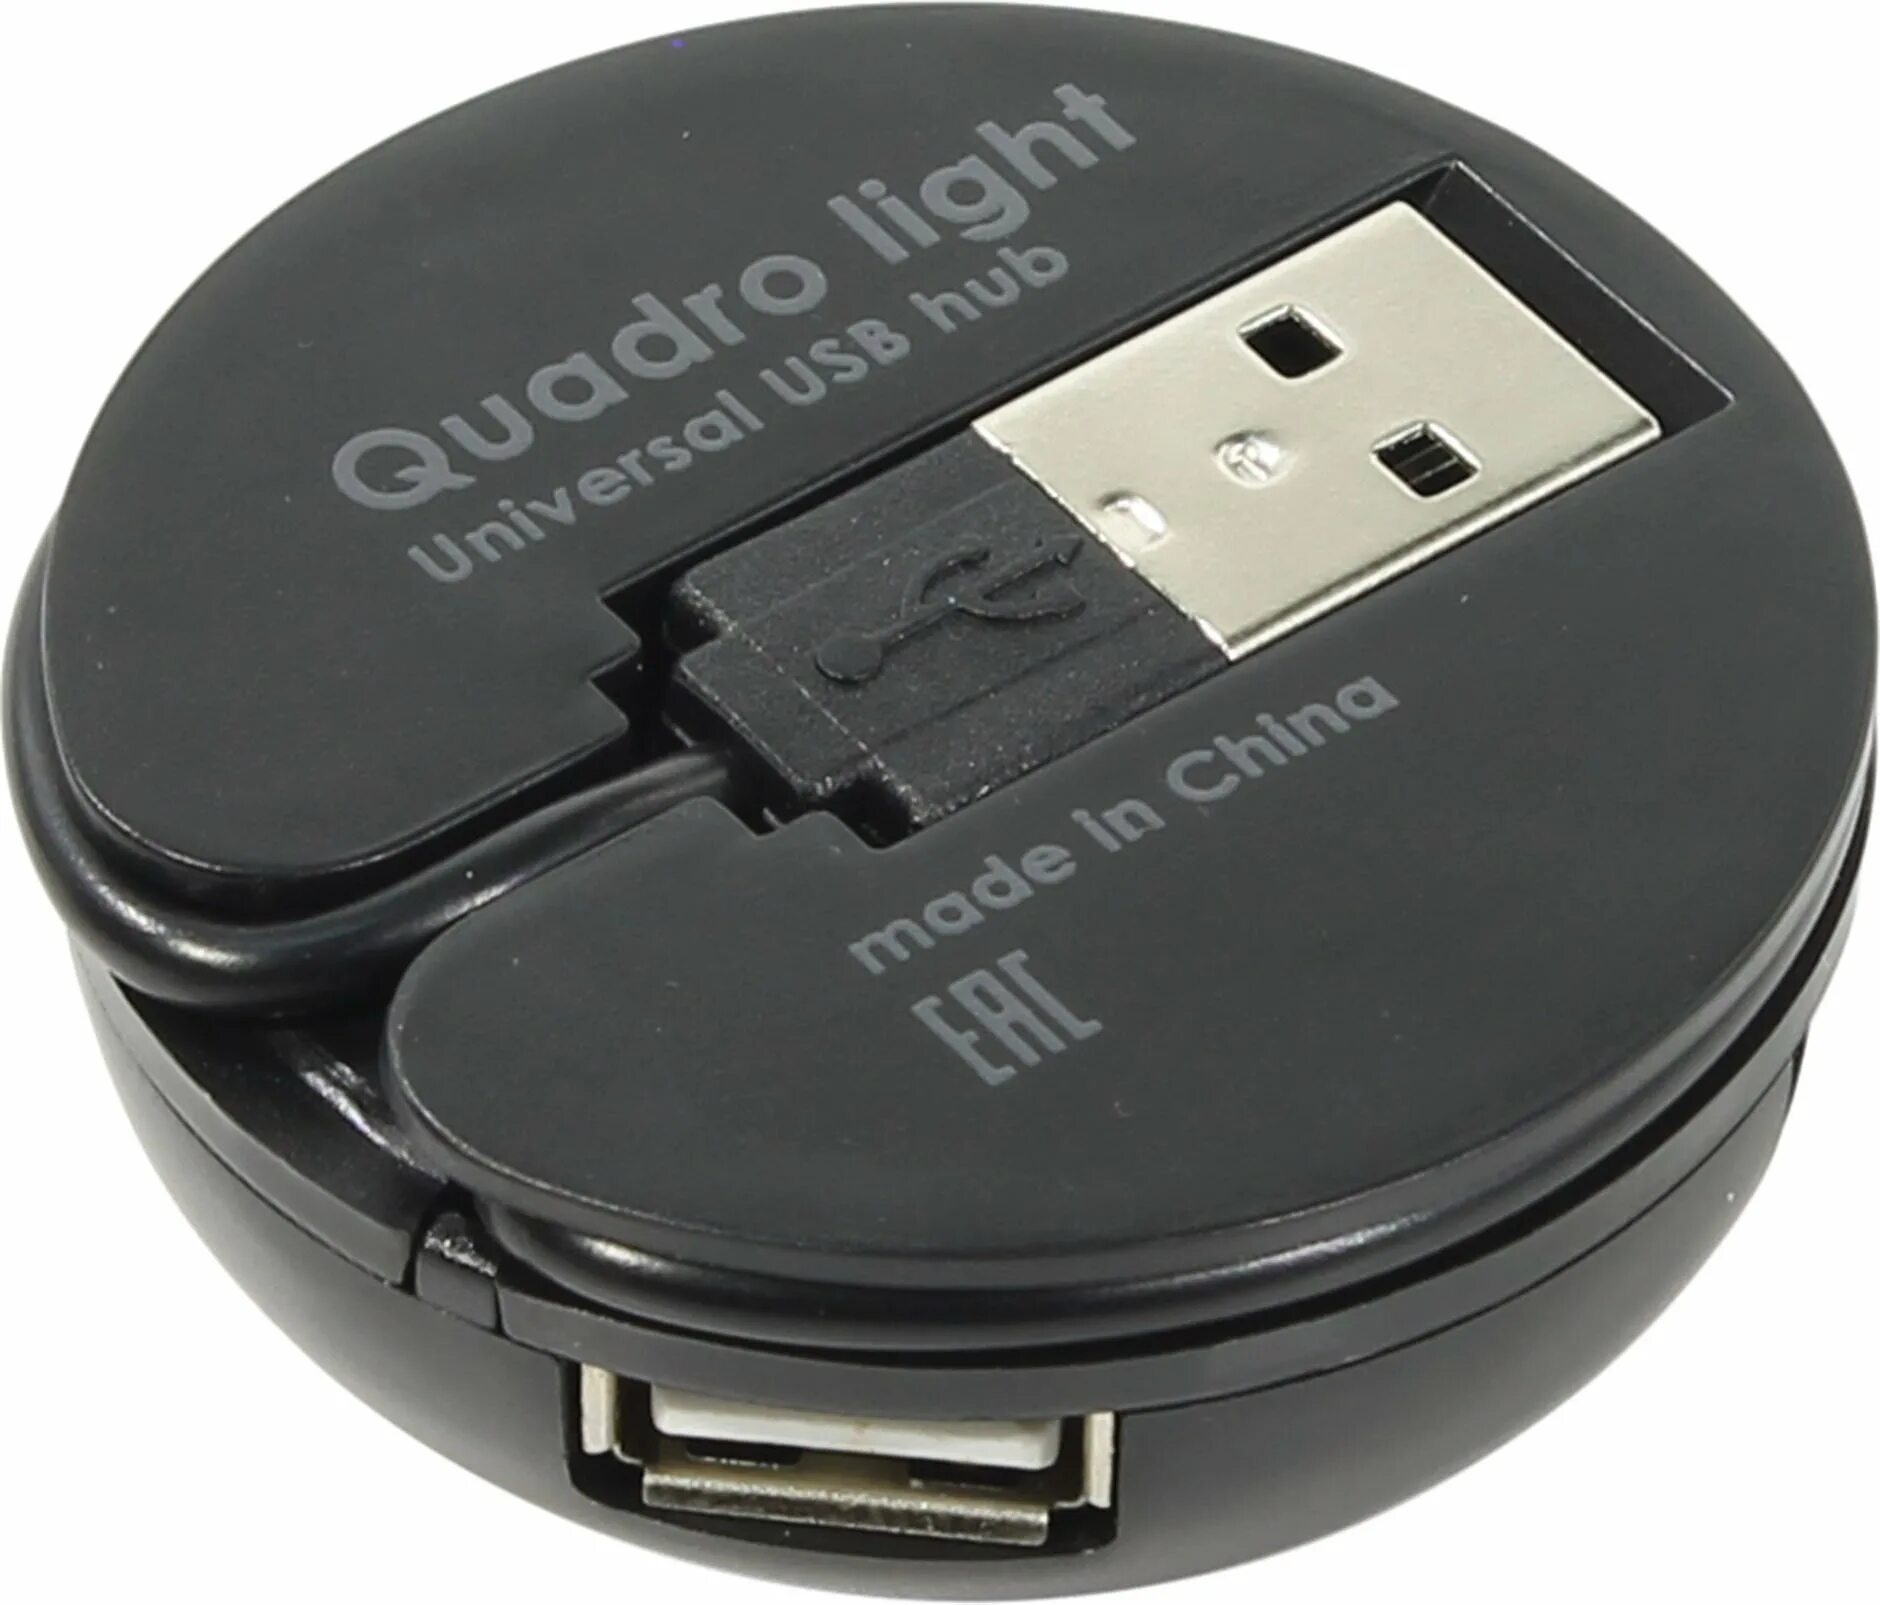 Хаб Defender Quadro Light, USB 2.0, 4 порта, 83201. USB-Hub Defender Quadro Light (83201) usb2 4 Port. USB-разветвитель Defender Quadro Light. Defender Quadro Light USB 2.0, 4 порта. Defender usb quadro